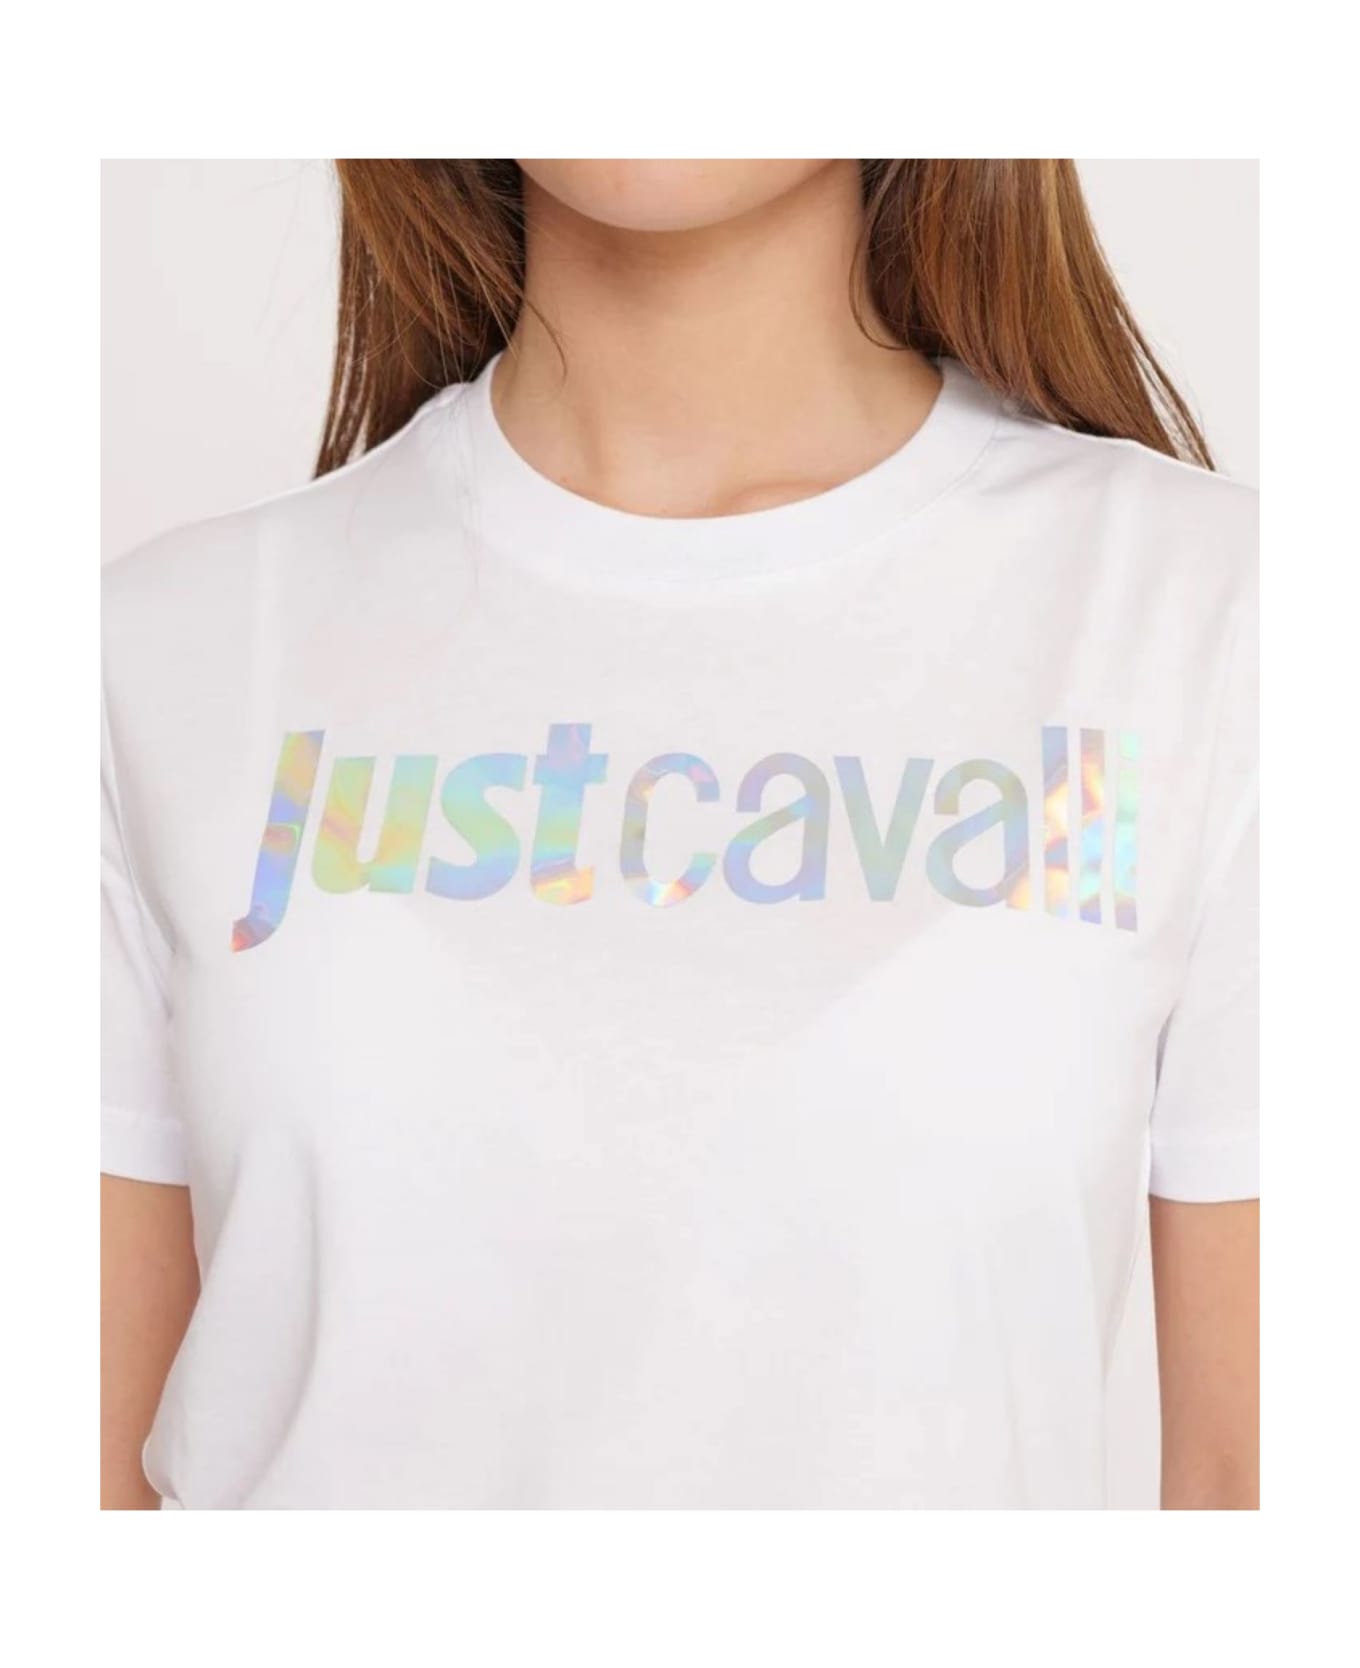 Just Cavalli T-shirt - White Tシャツ